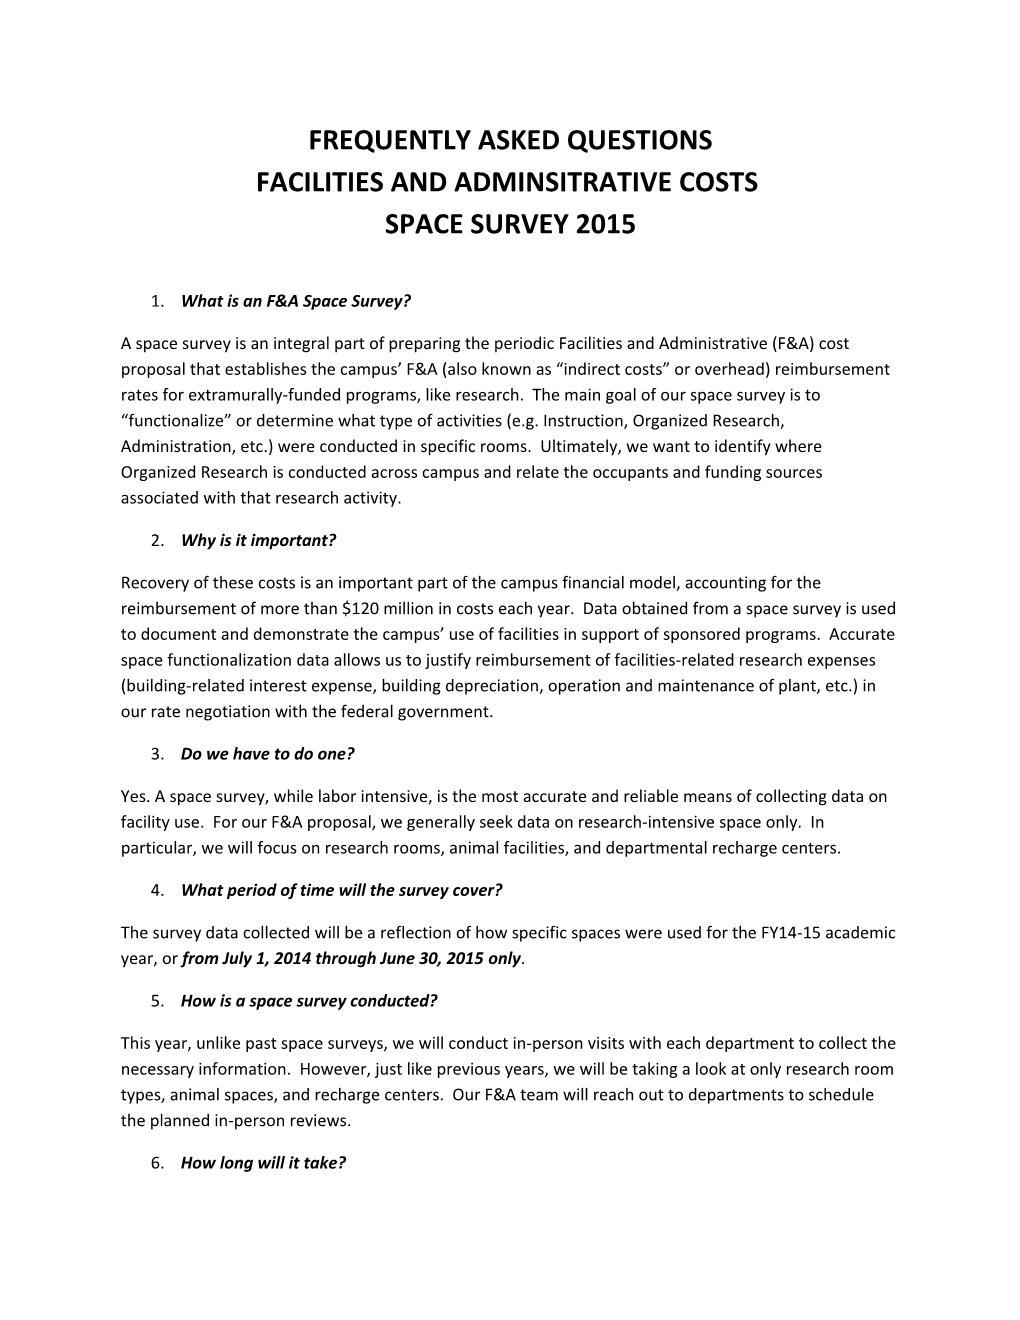 Facilities and Adminsitrative Costs